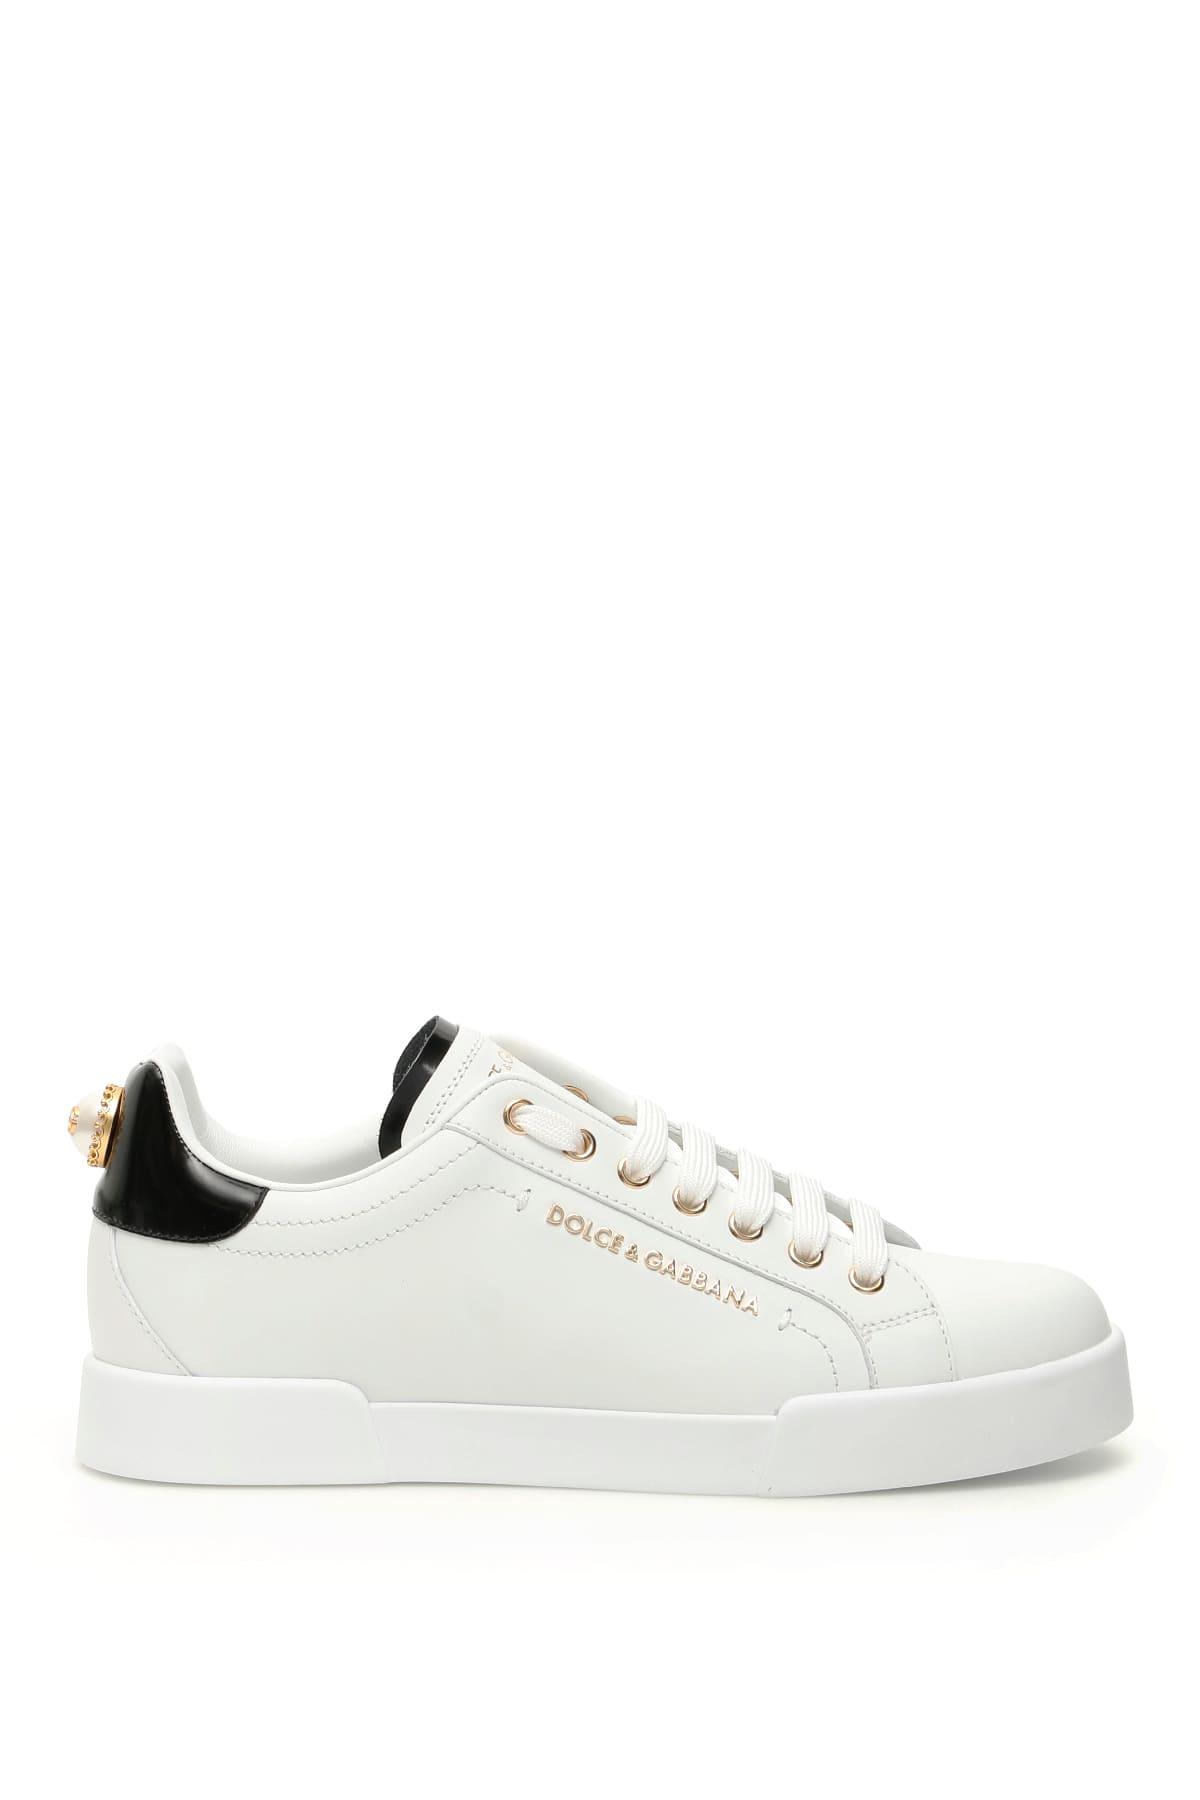 Dolce & Gabbana Portofino Leather Sneakers Dg Pearl in White,Black ...